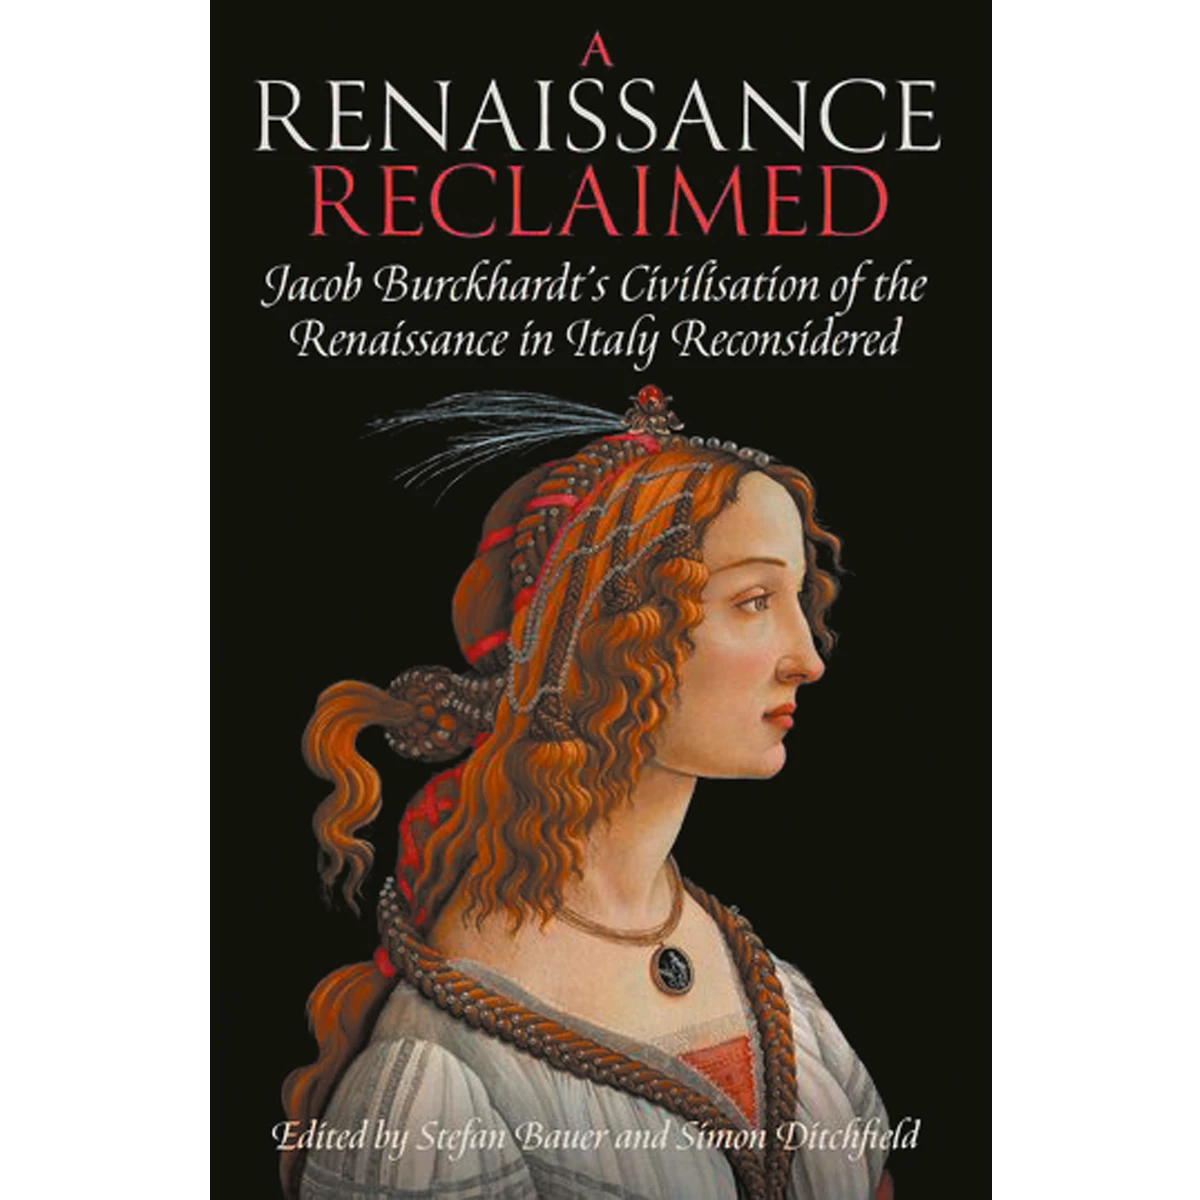 A Renaissance Reclaimed